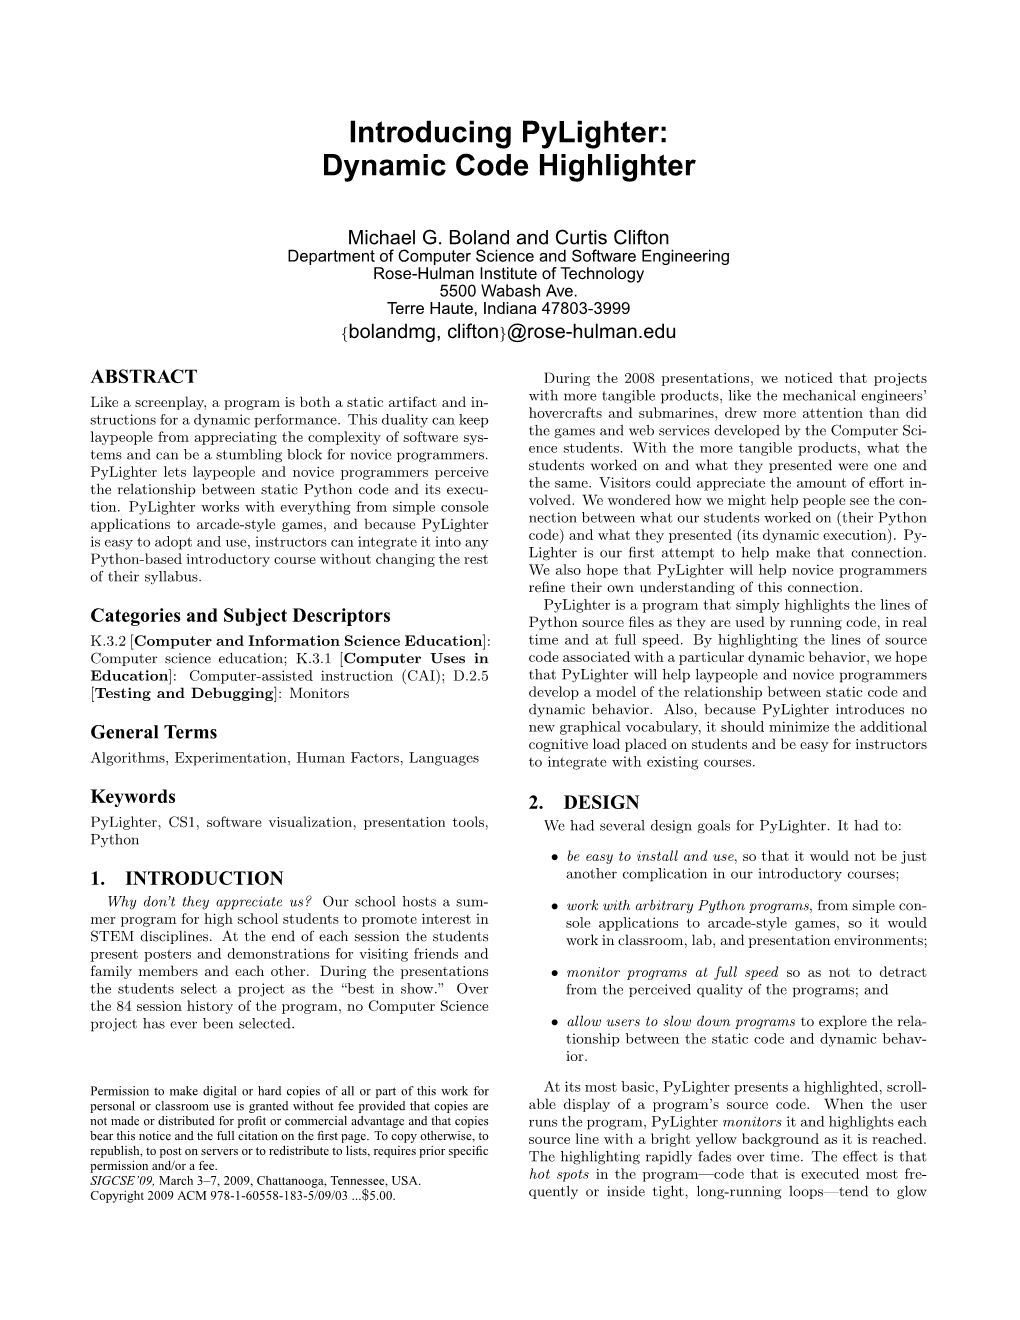 Dynamic Code Highlighter